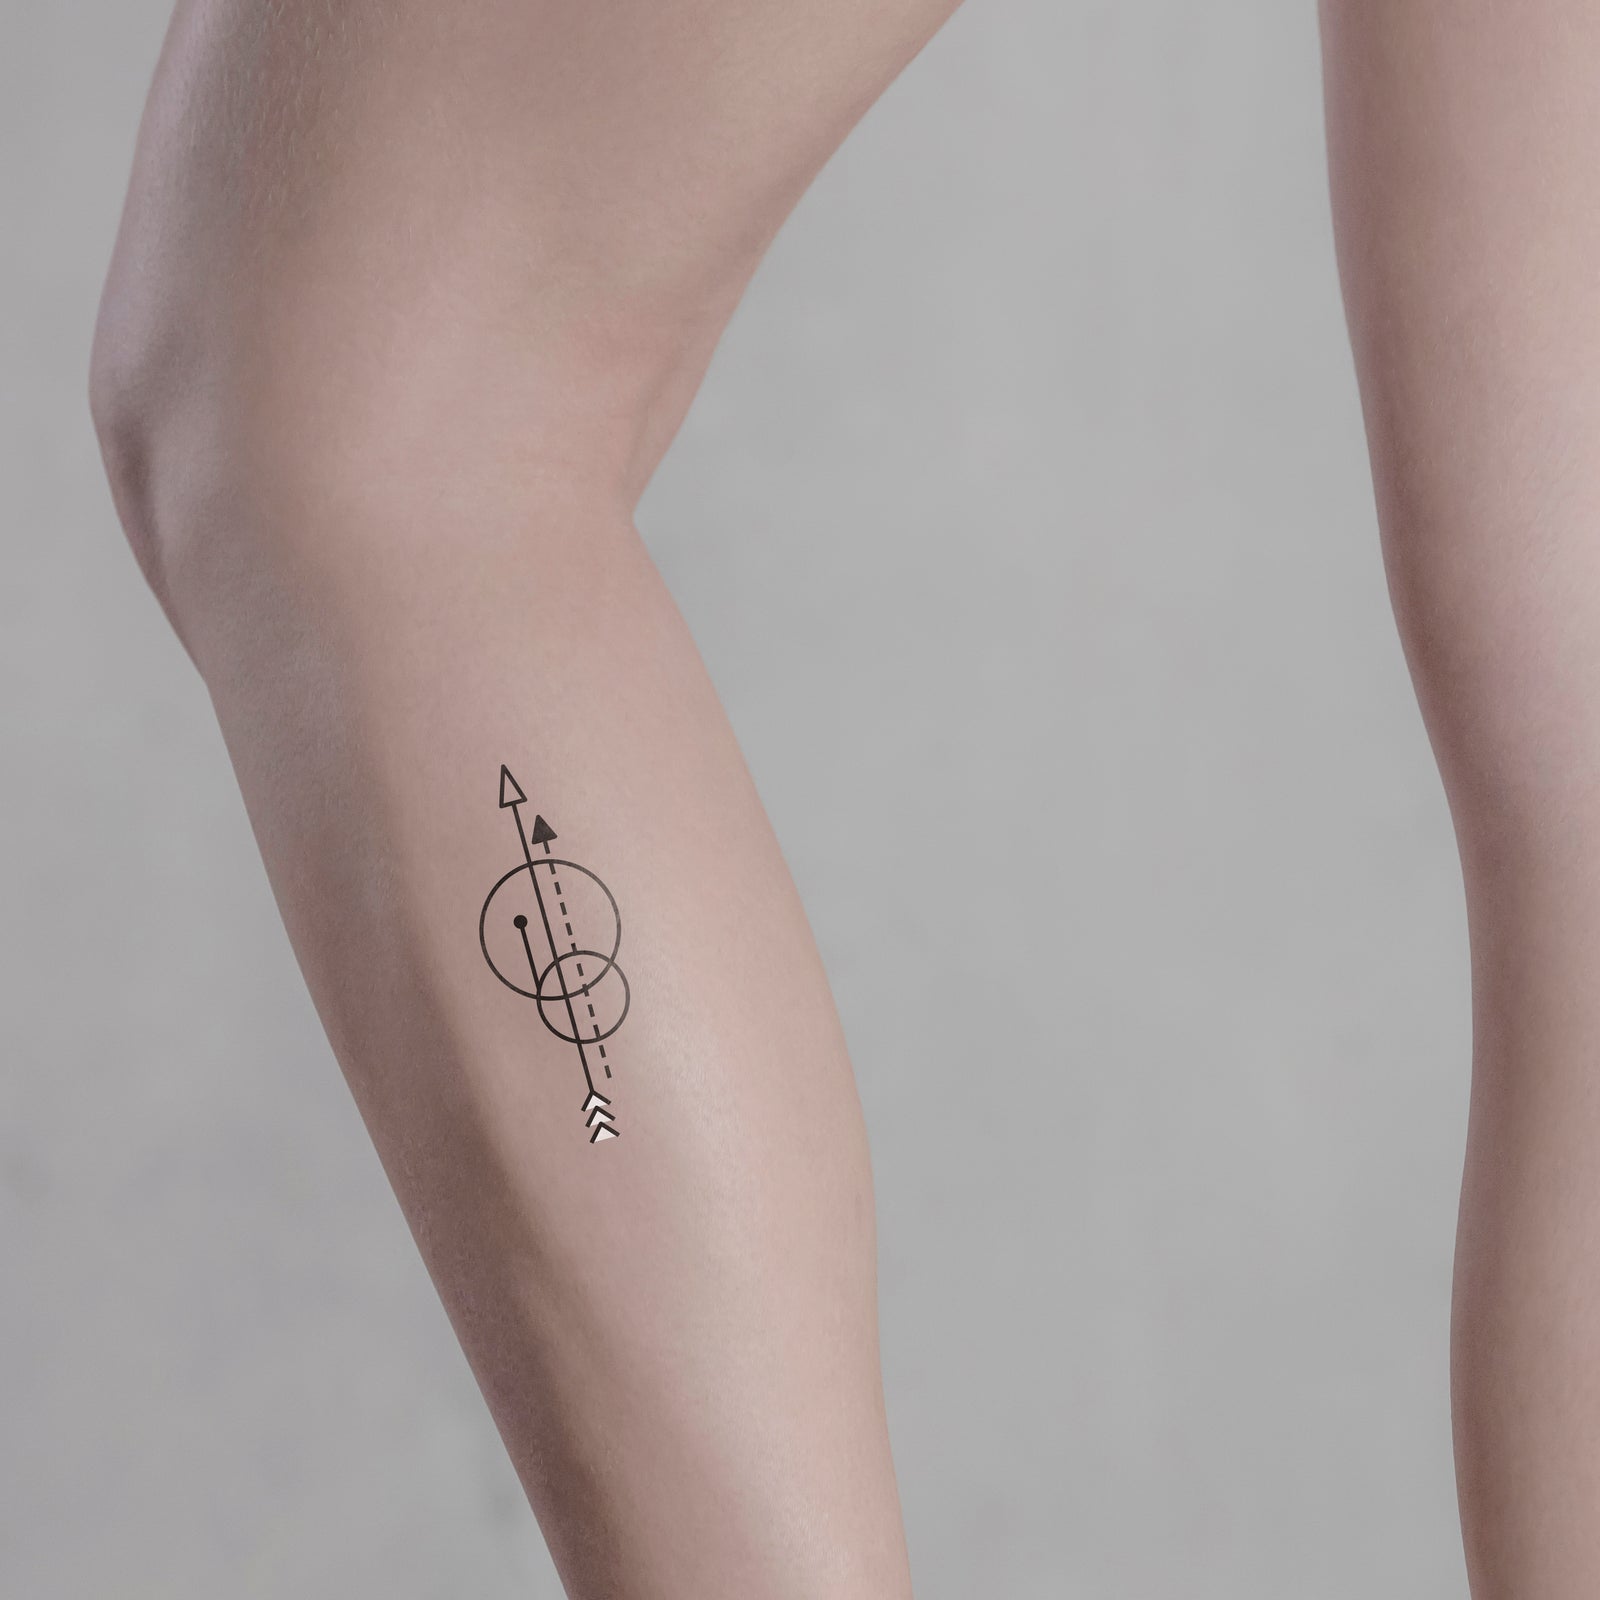 Small arrow tattoo on the Achilles heel.